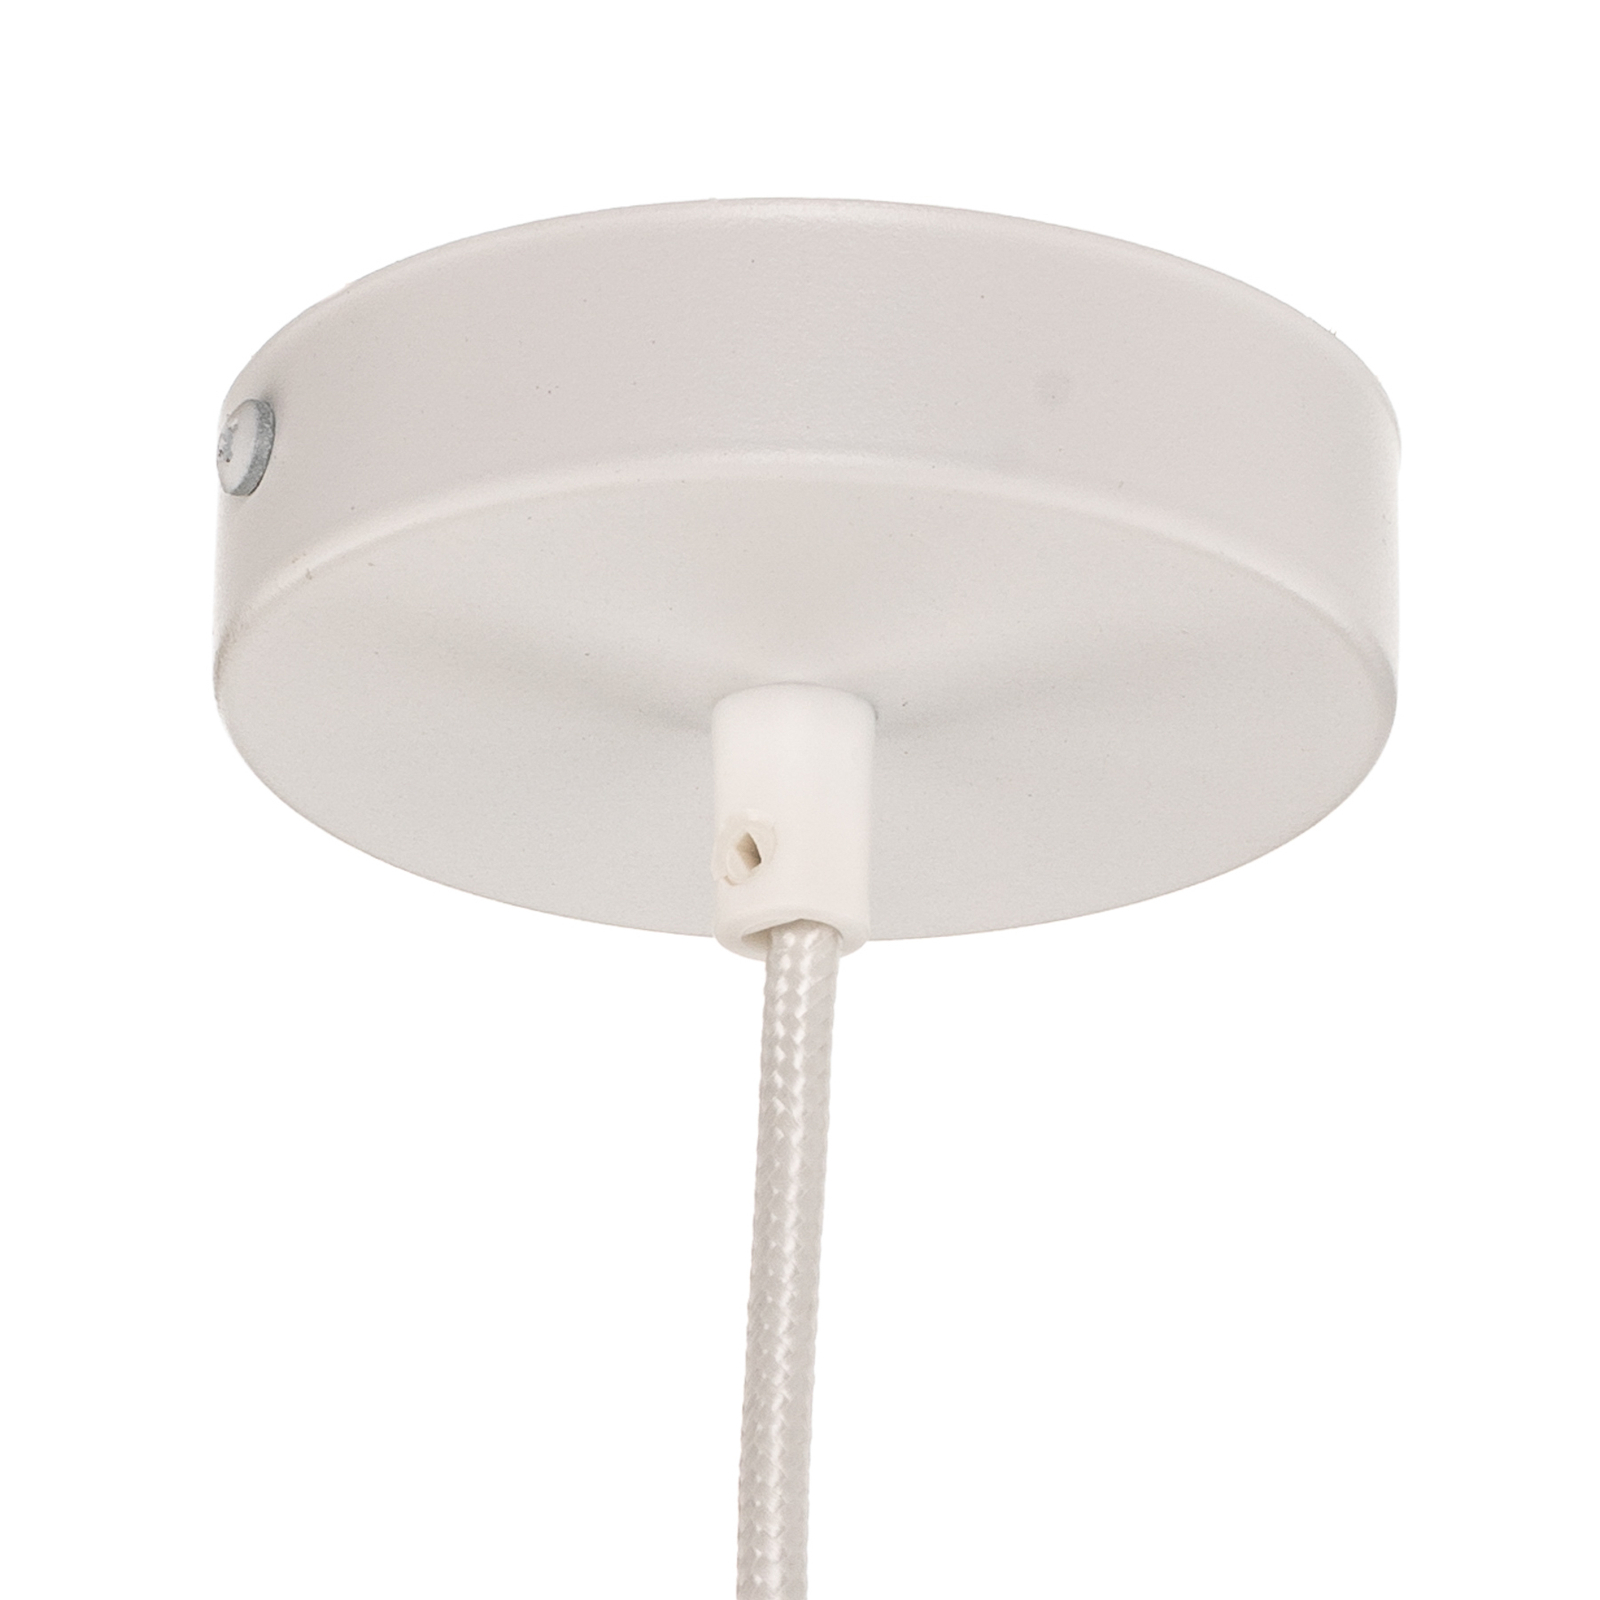 Hanglamp Monochrome Flash helder/wit Ø 25cm